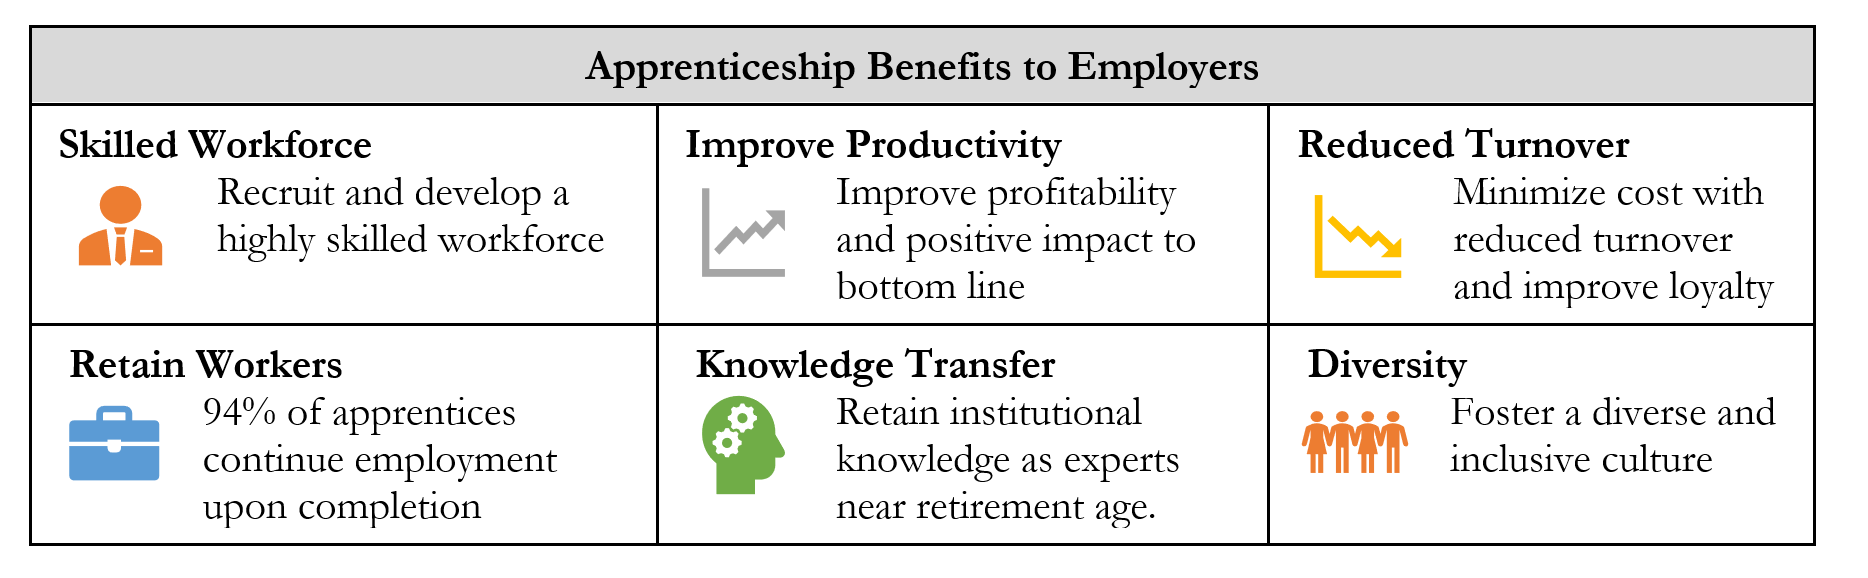 Apprenticeship Benefits to Employers Graphic